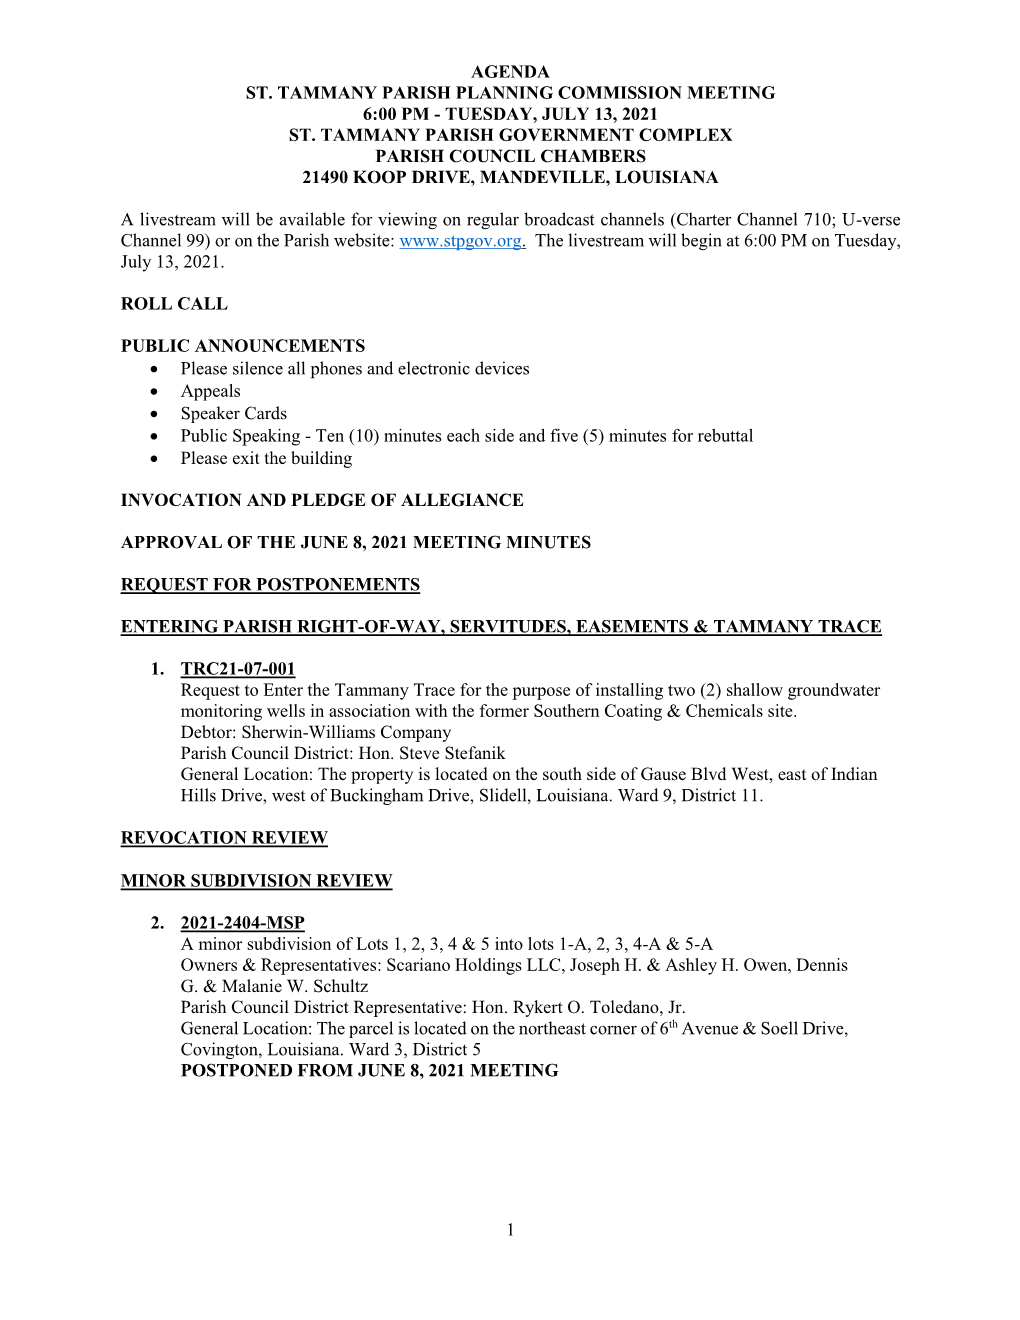 Agenda St. Tammany Parish Planning Commission Meeting 6:00 Pm - Tuesday, July 13, 2021 St